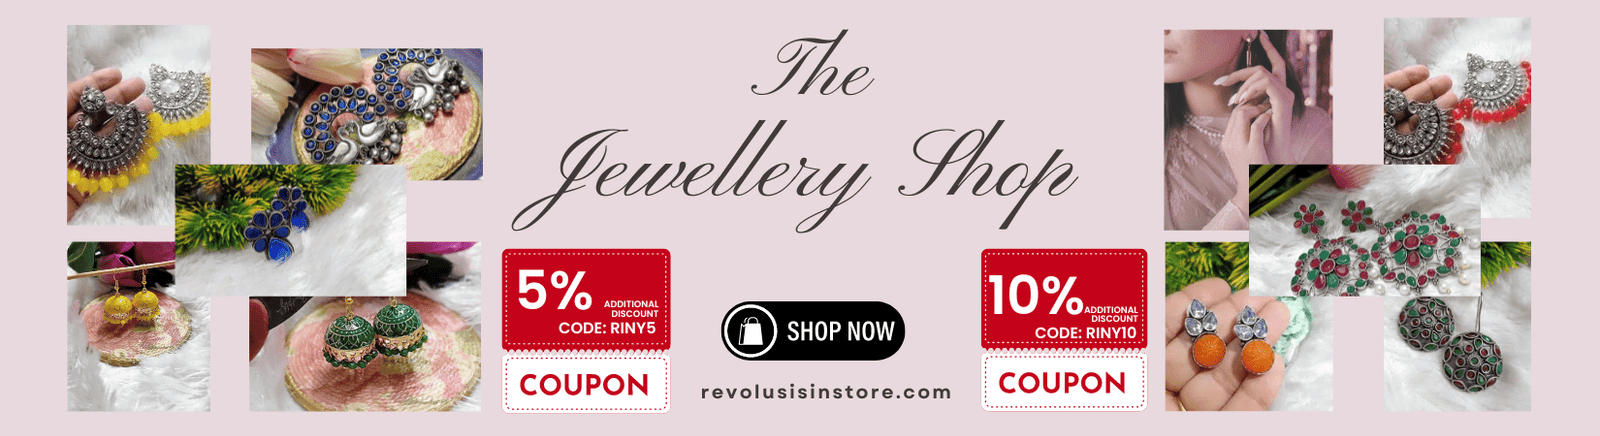 Jewellery_Shop_Revolusisinstore_Slider